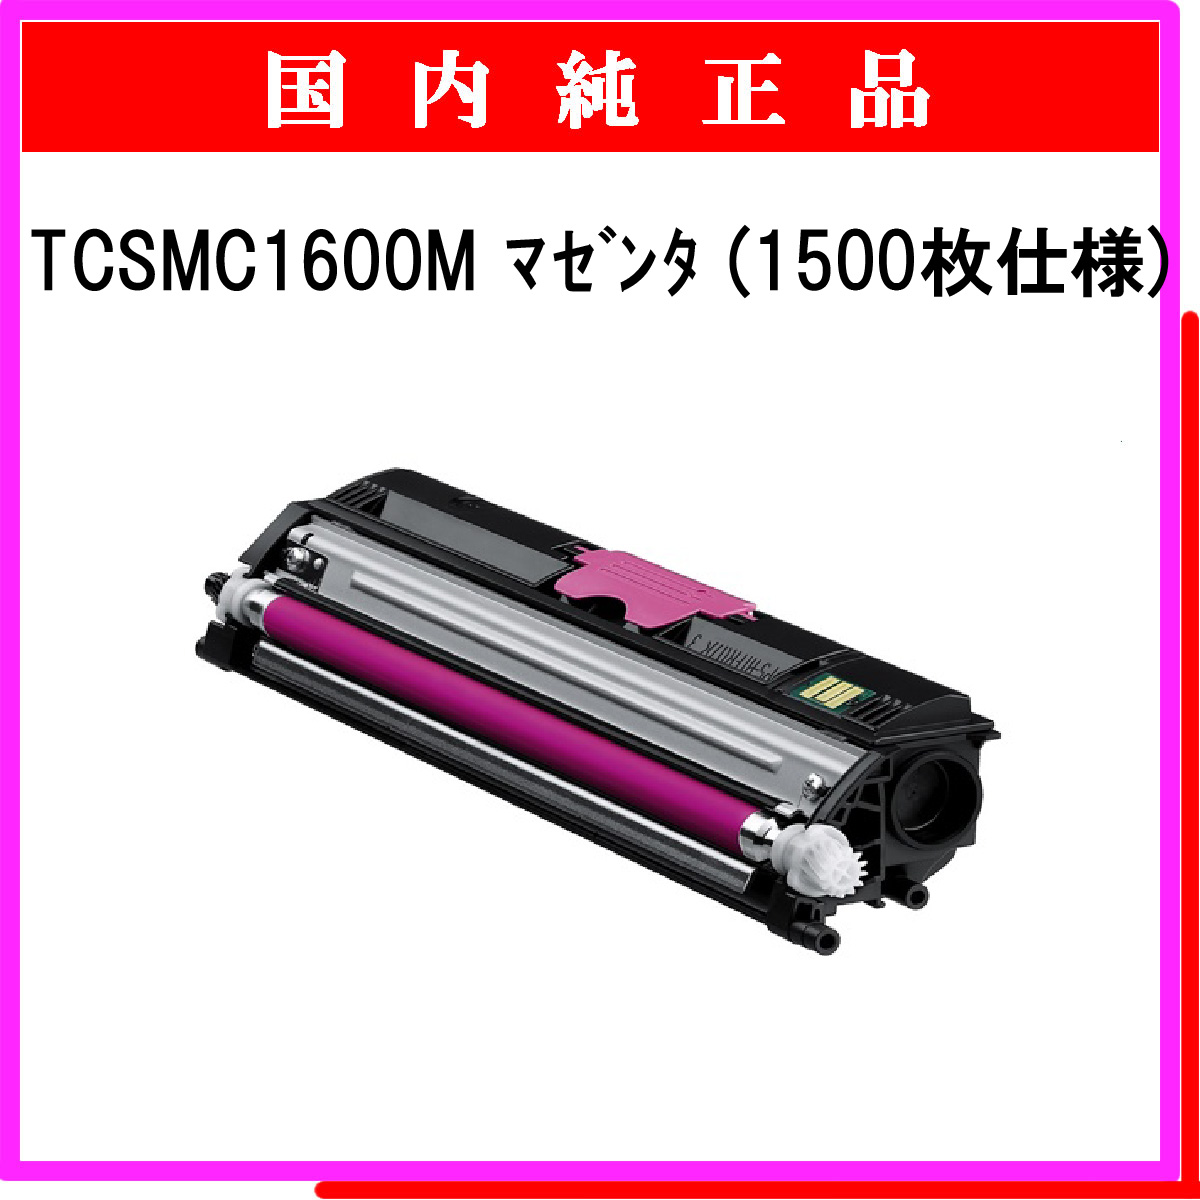 TCSMC1600M (1500枚仕様) 純正